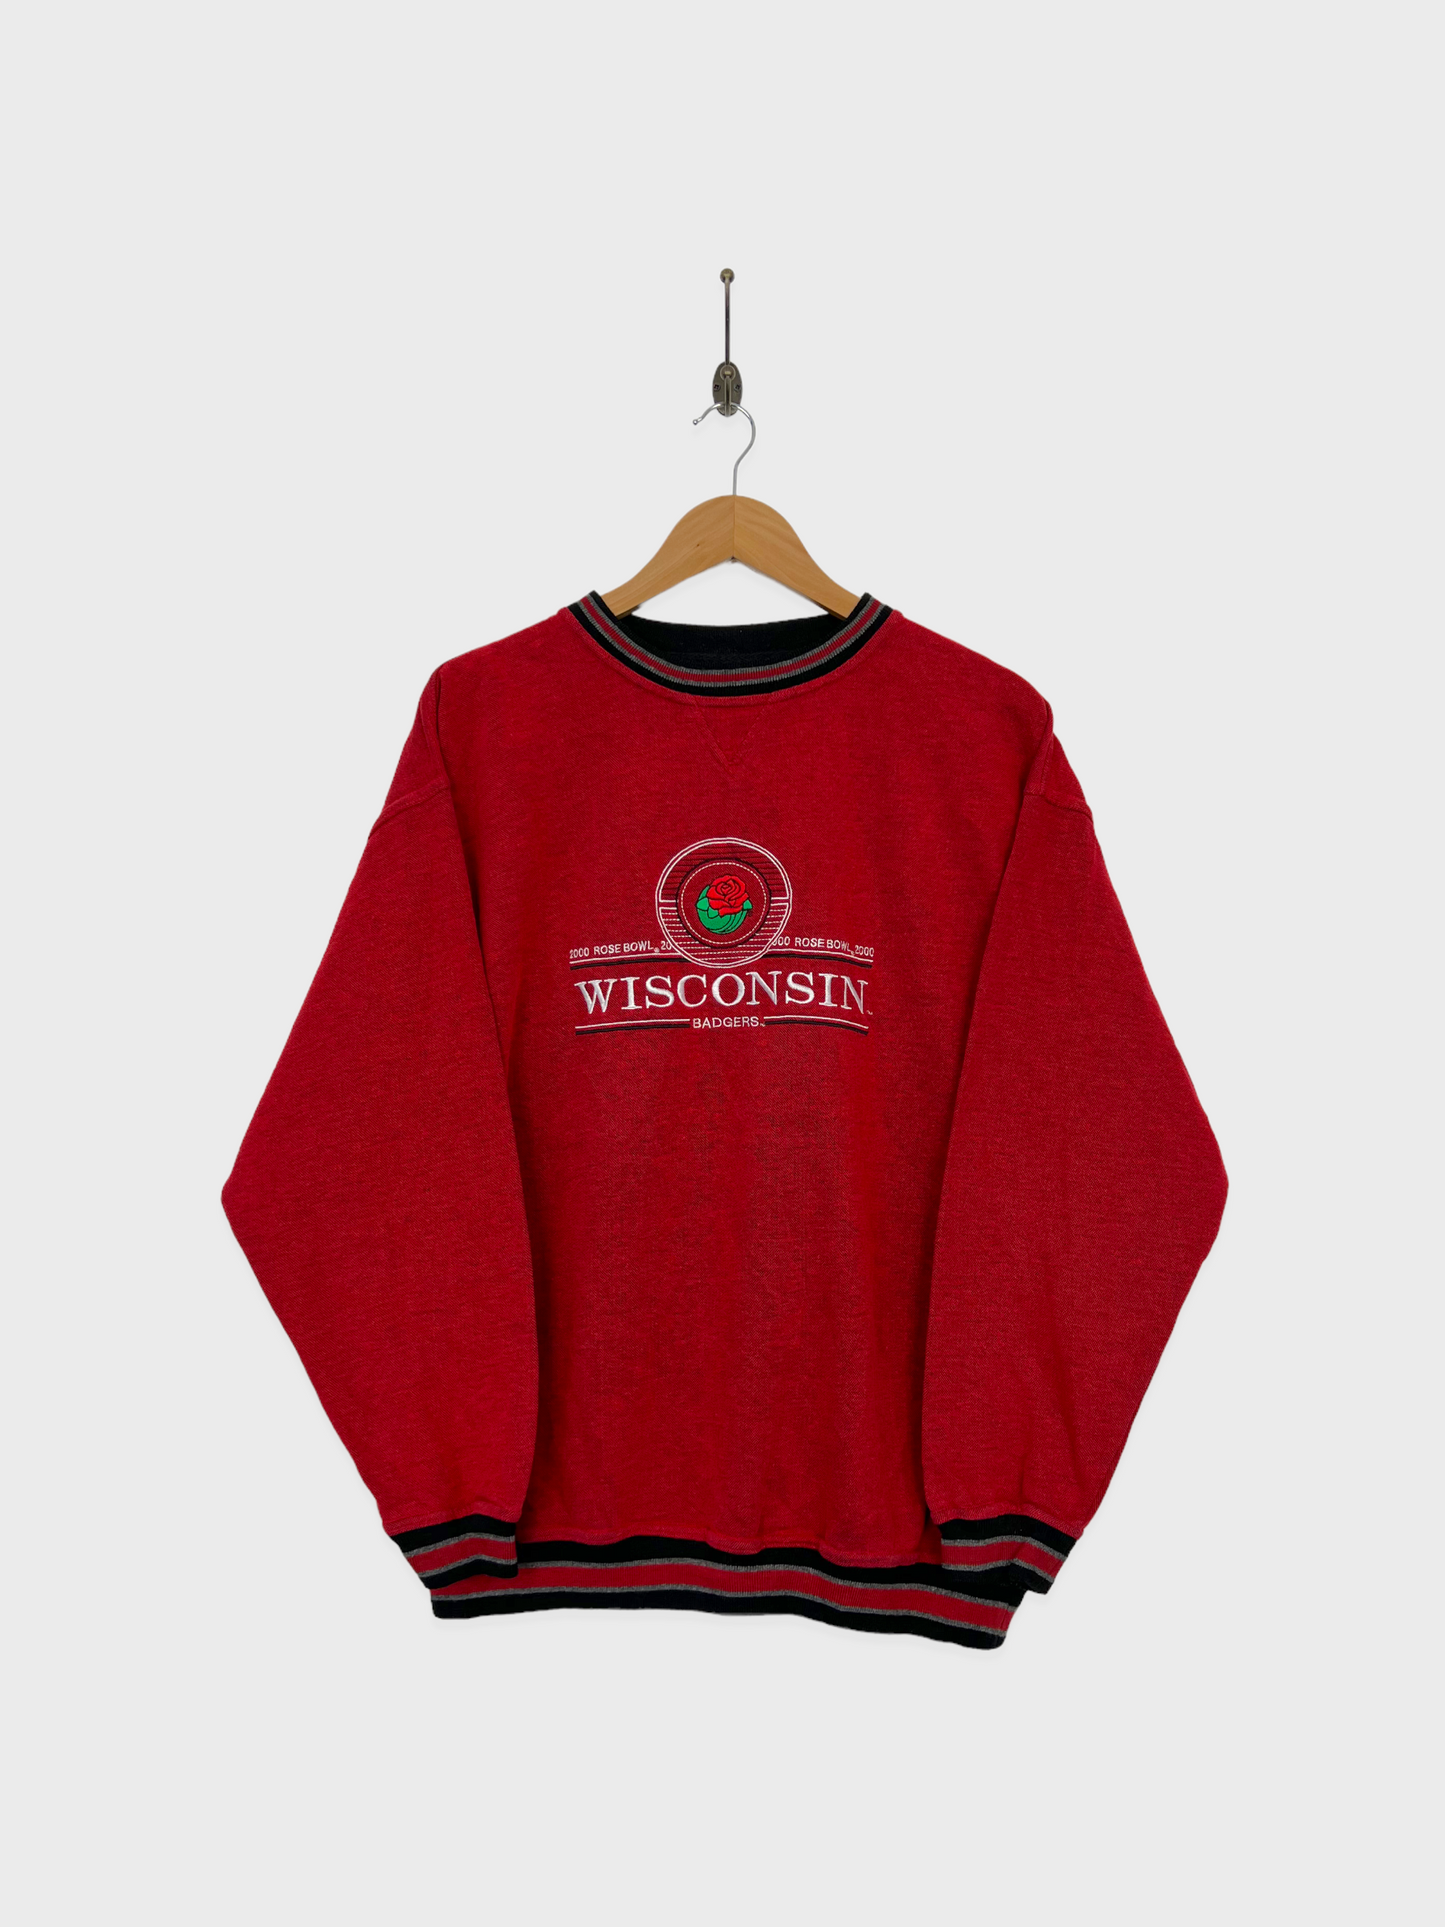 2000 Wisconsin Badgers Embroidered Vintage Sweatshirt Size 12